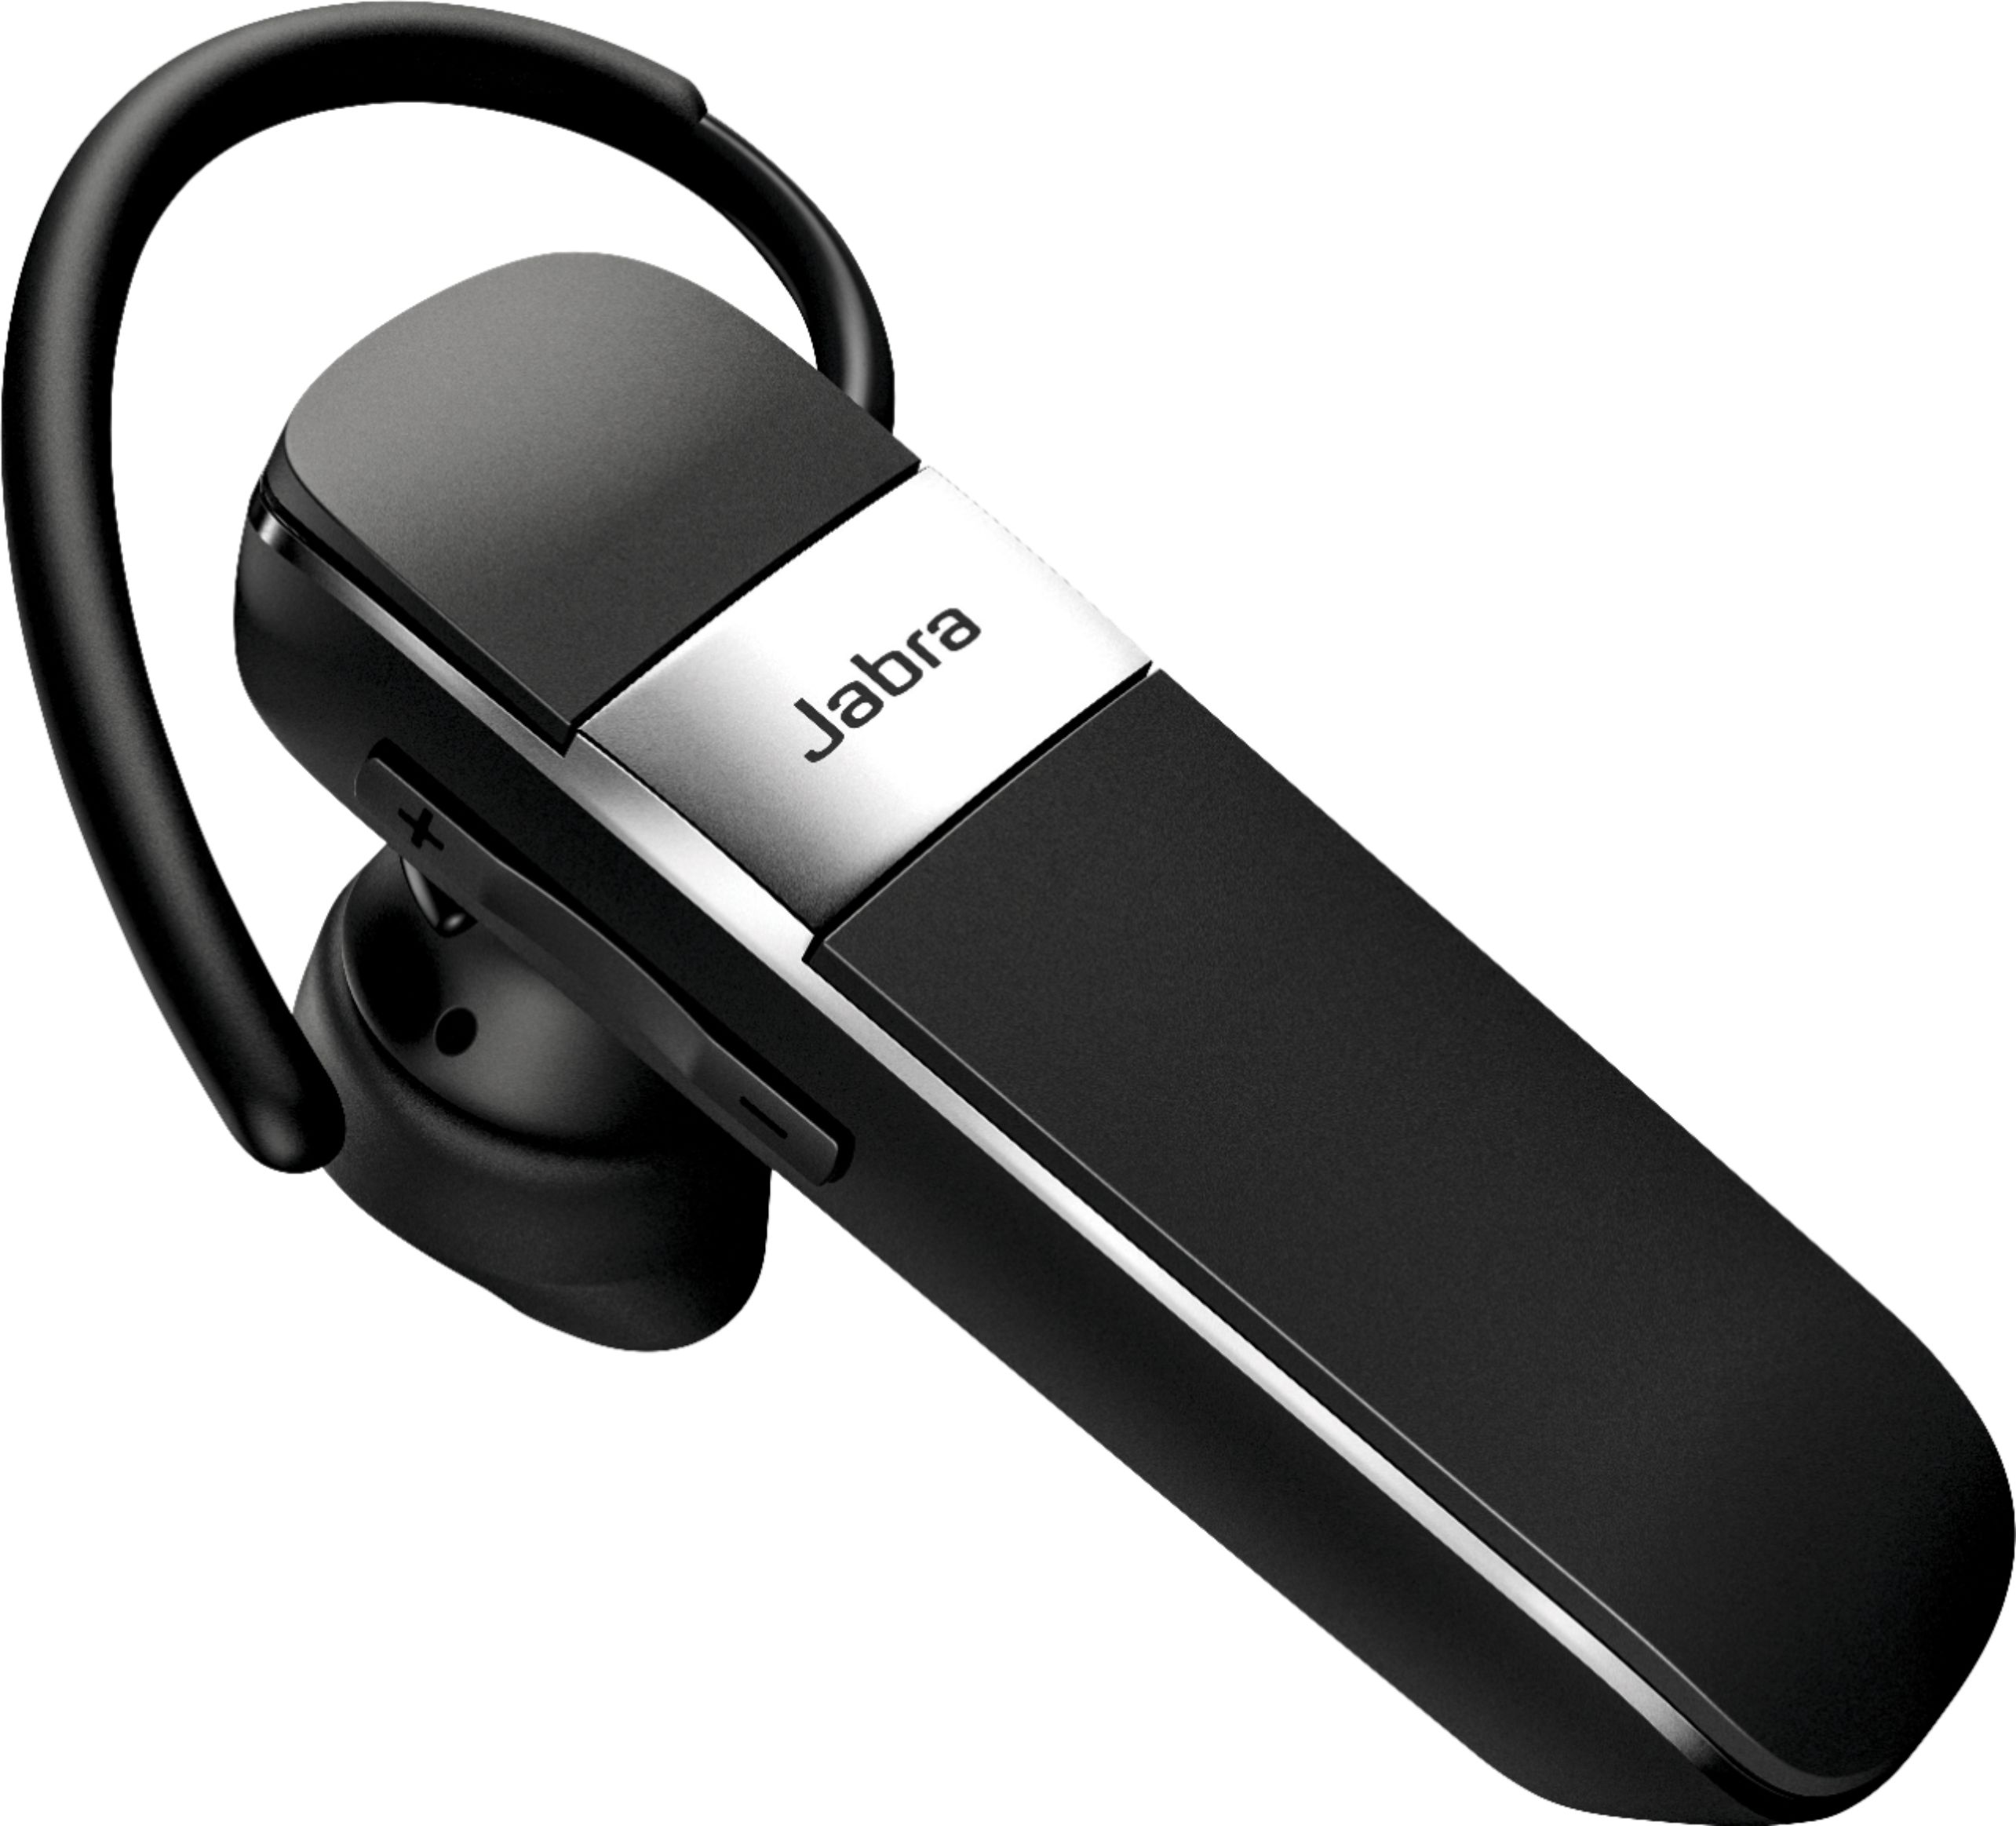 Angle View: Jabra - Talk 15 Bluetooth Headset - Black/Silver